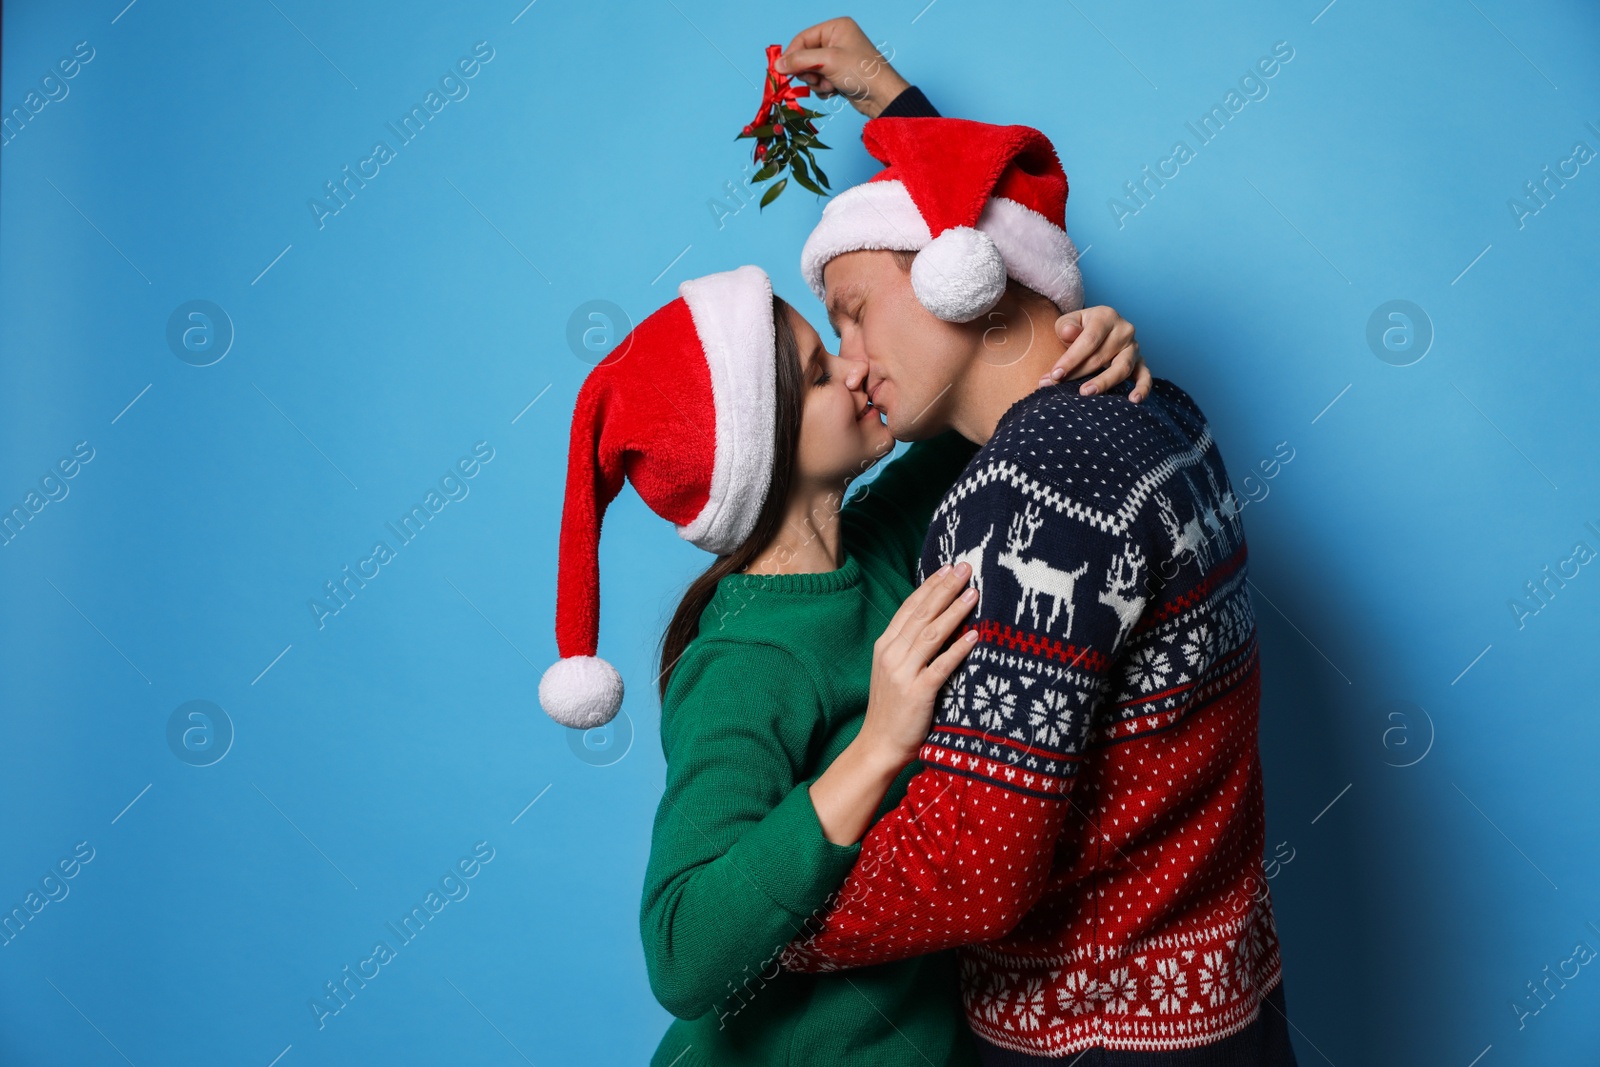 Photo of Happy couple kissing under mistletoe bunch on light blue background